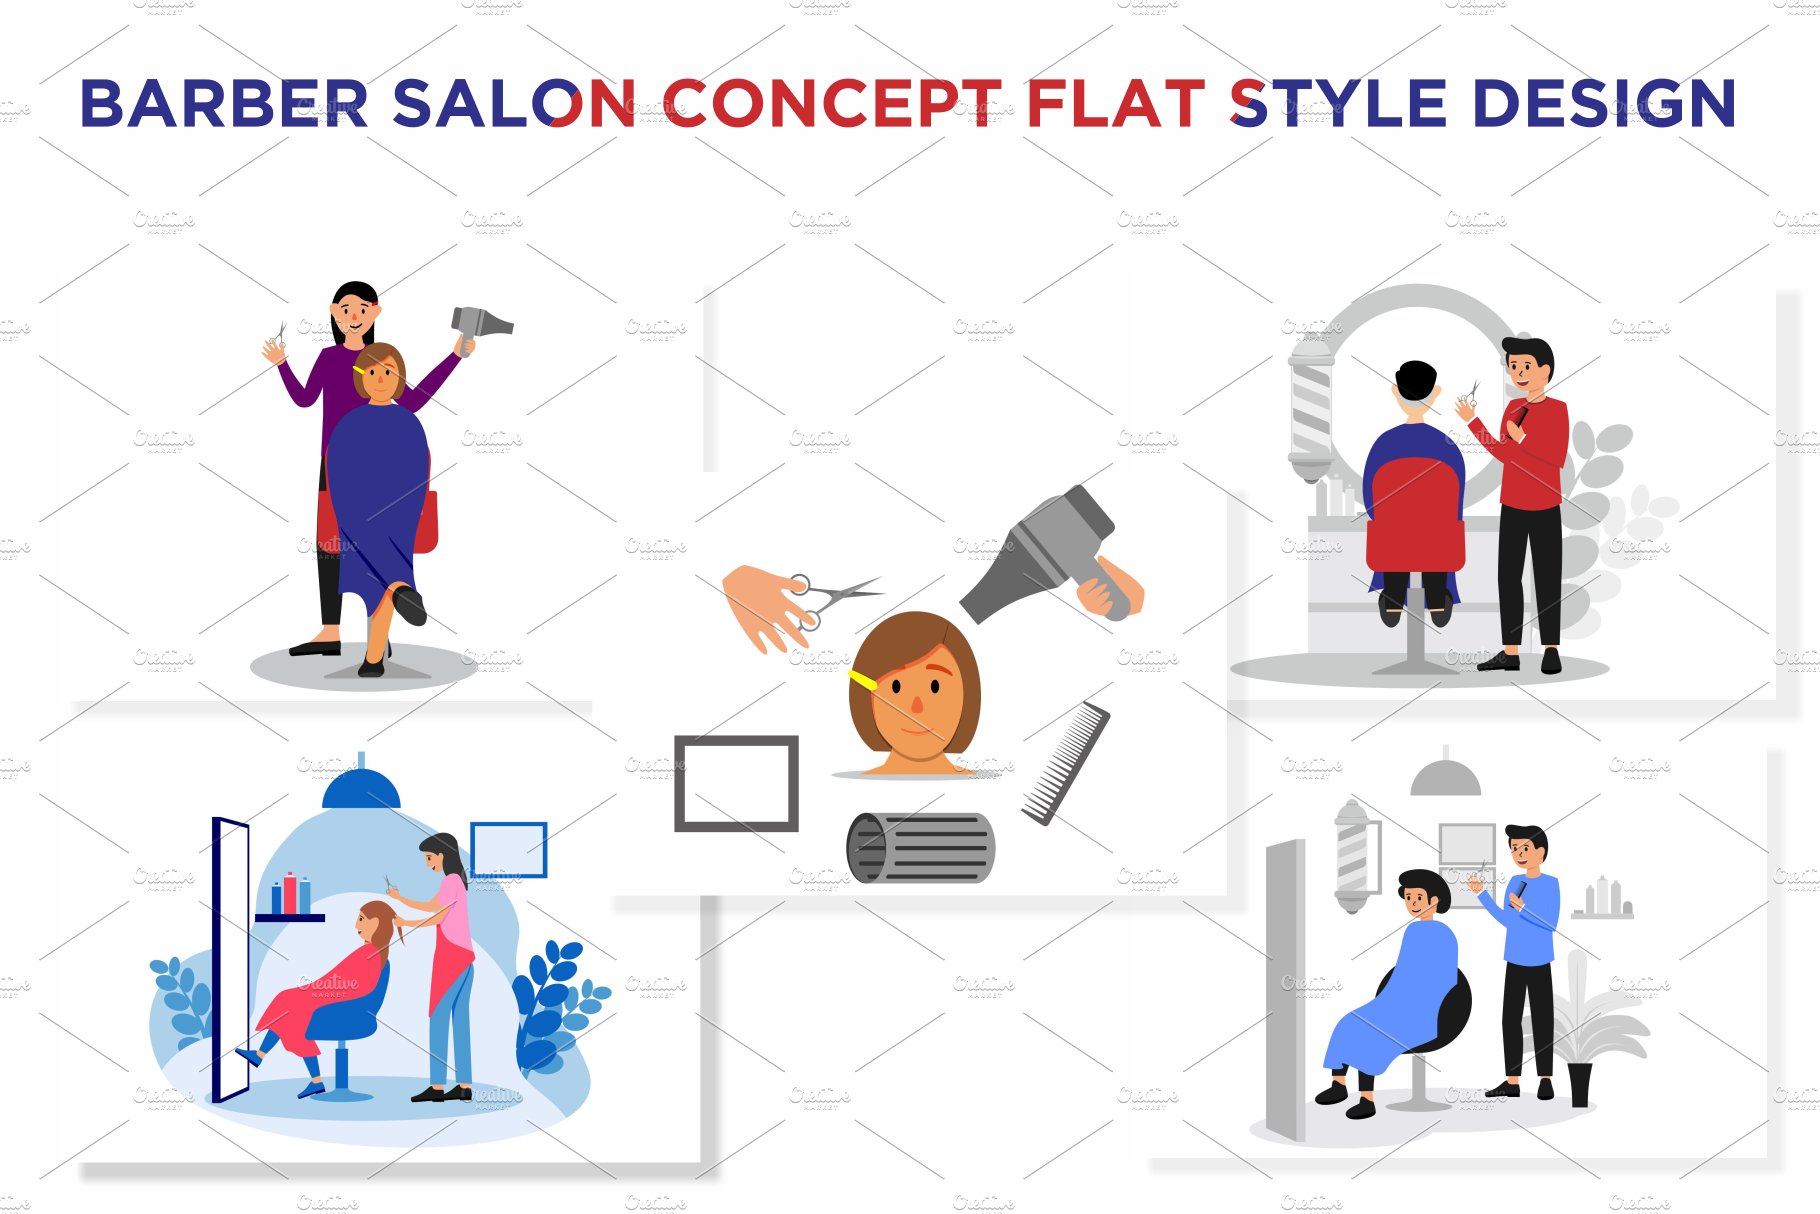 Barber Salon Concept Flat Designs cover image.